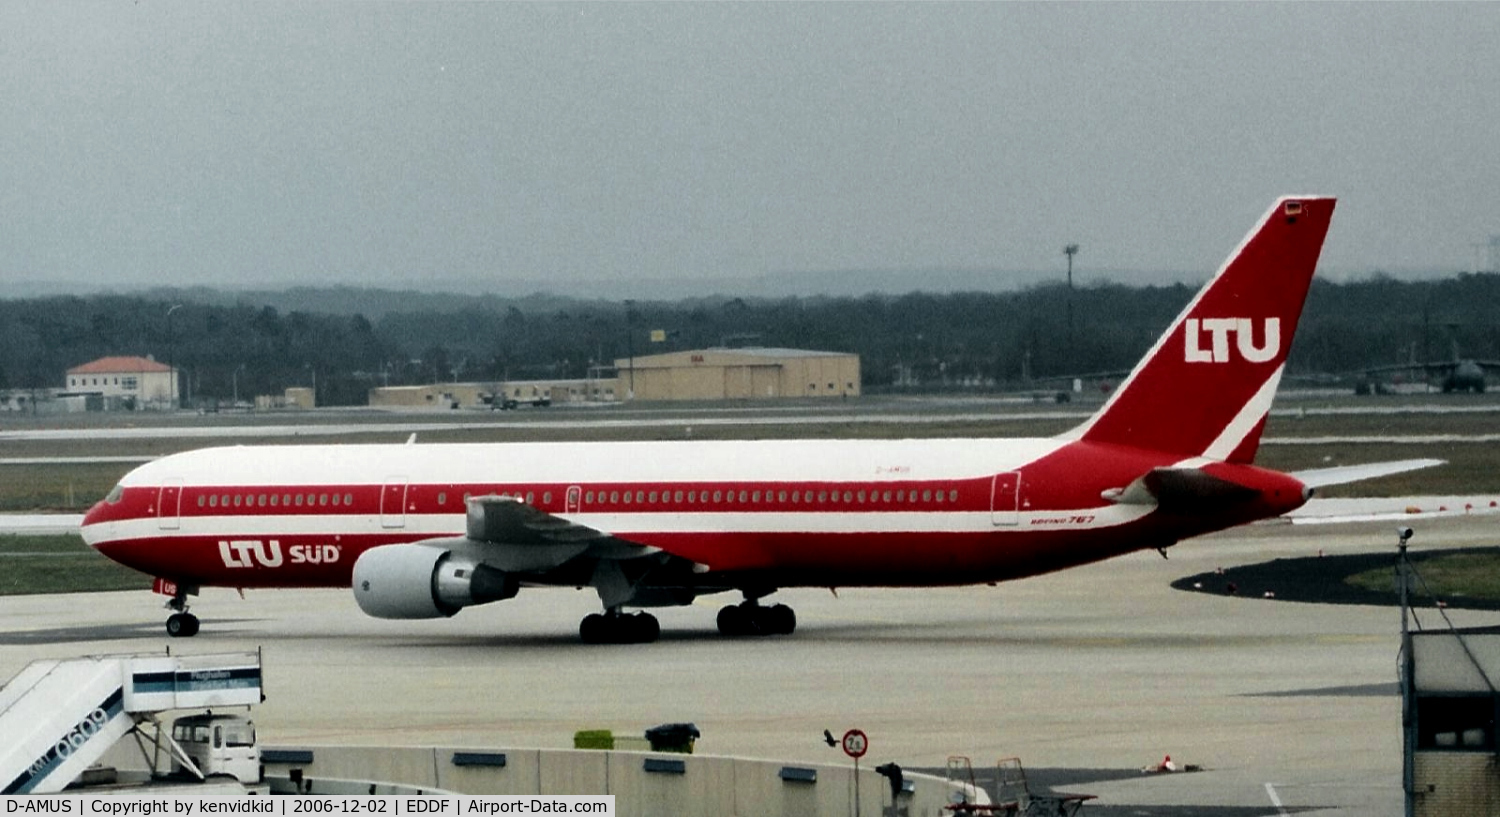 D-AMUS, 1989 Boeing 767-3G5 C/N 24258, LTU sud